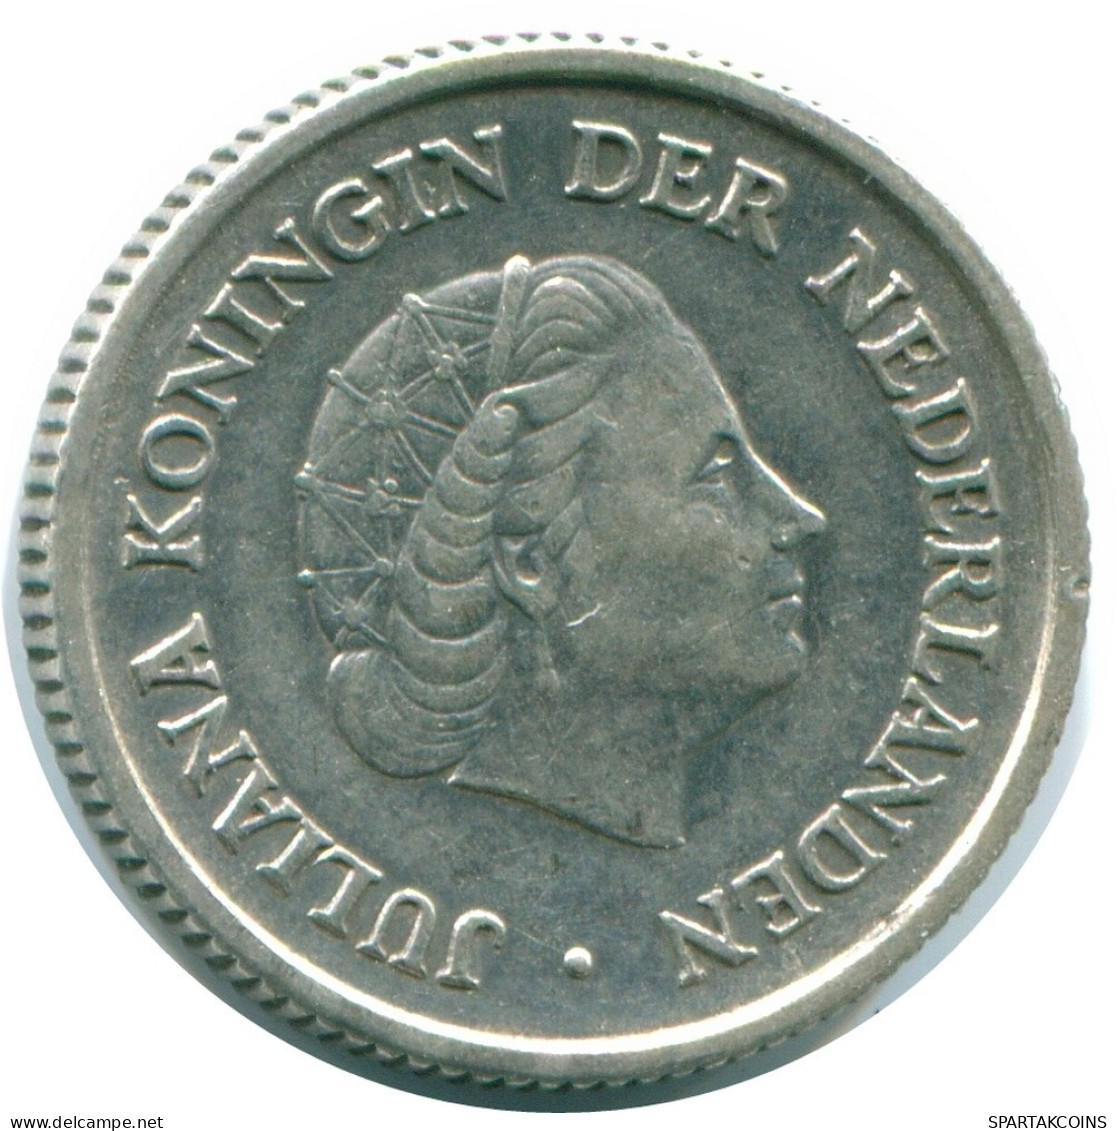 1/4 GULDEN 1957 NIEDERLÄNDISCHE ANTILLEN SILBER Koloniale Münze #NL10981.4.D.A - Netherlands Antilles